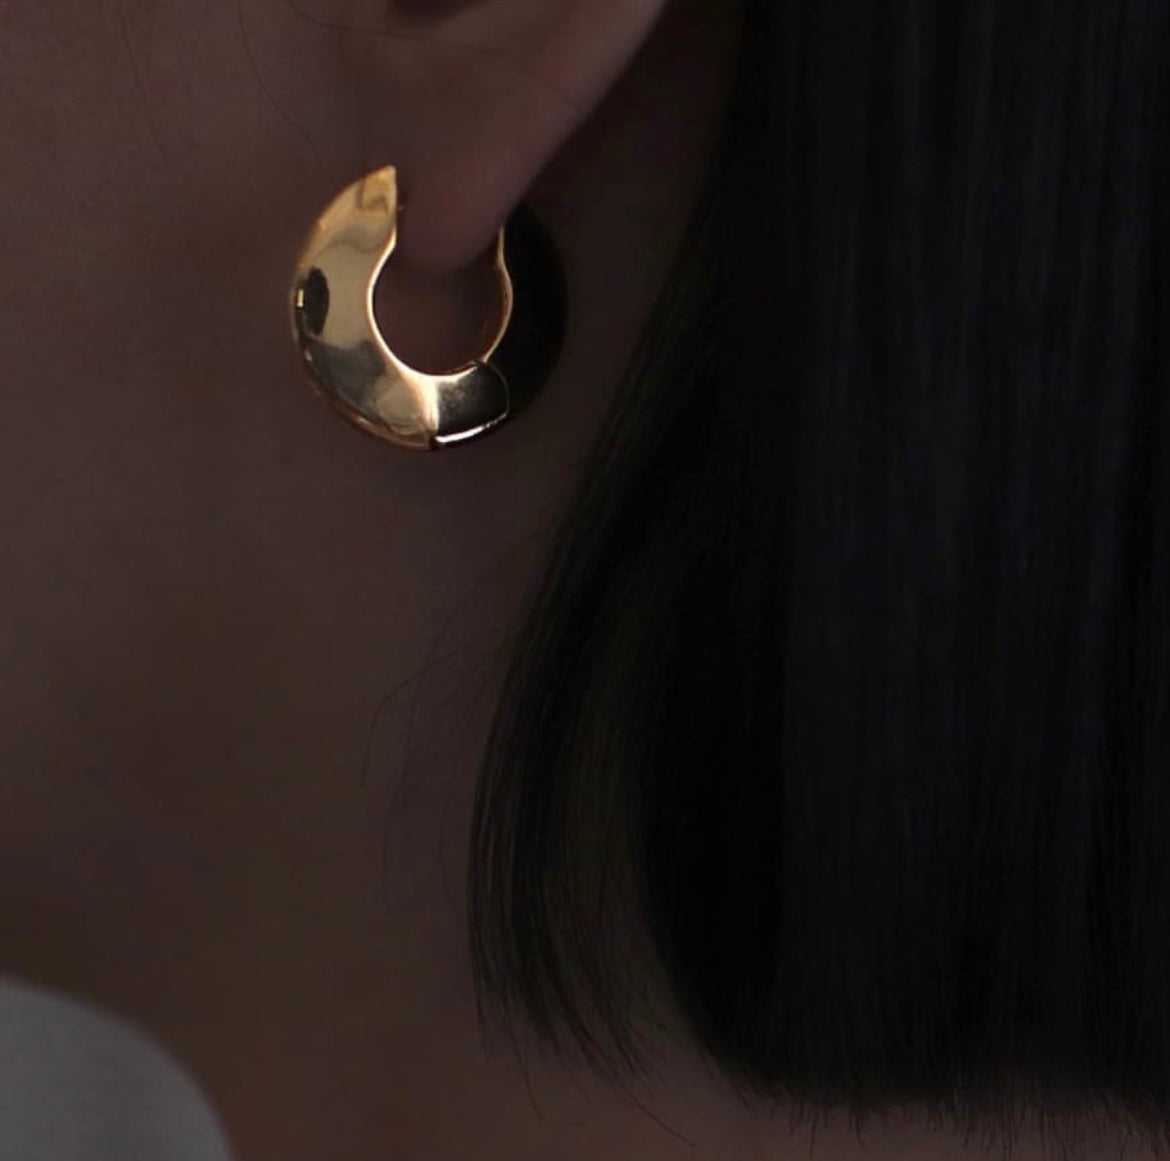 Satur Earrings in Gold